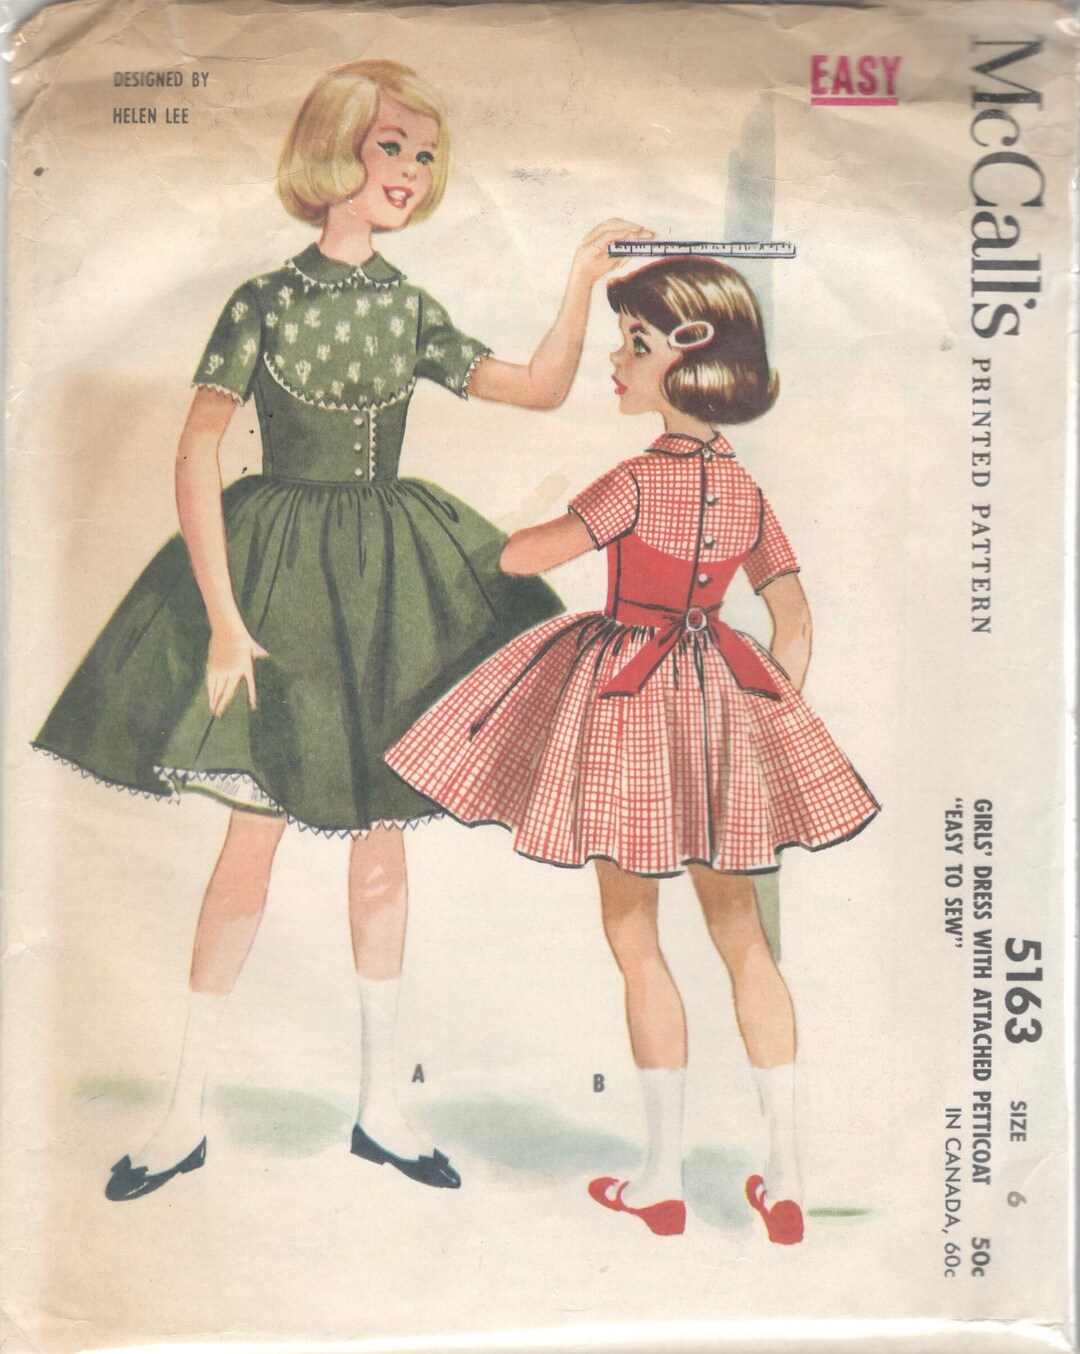 1950s Mccalls 5163 Designer Helen Lee Girls Midriff Dress Pattern ...